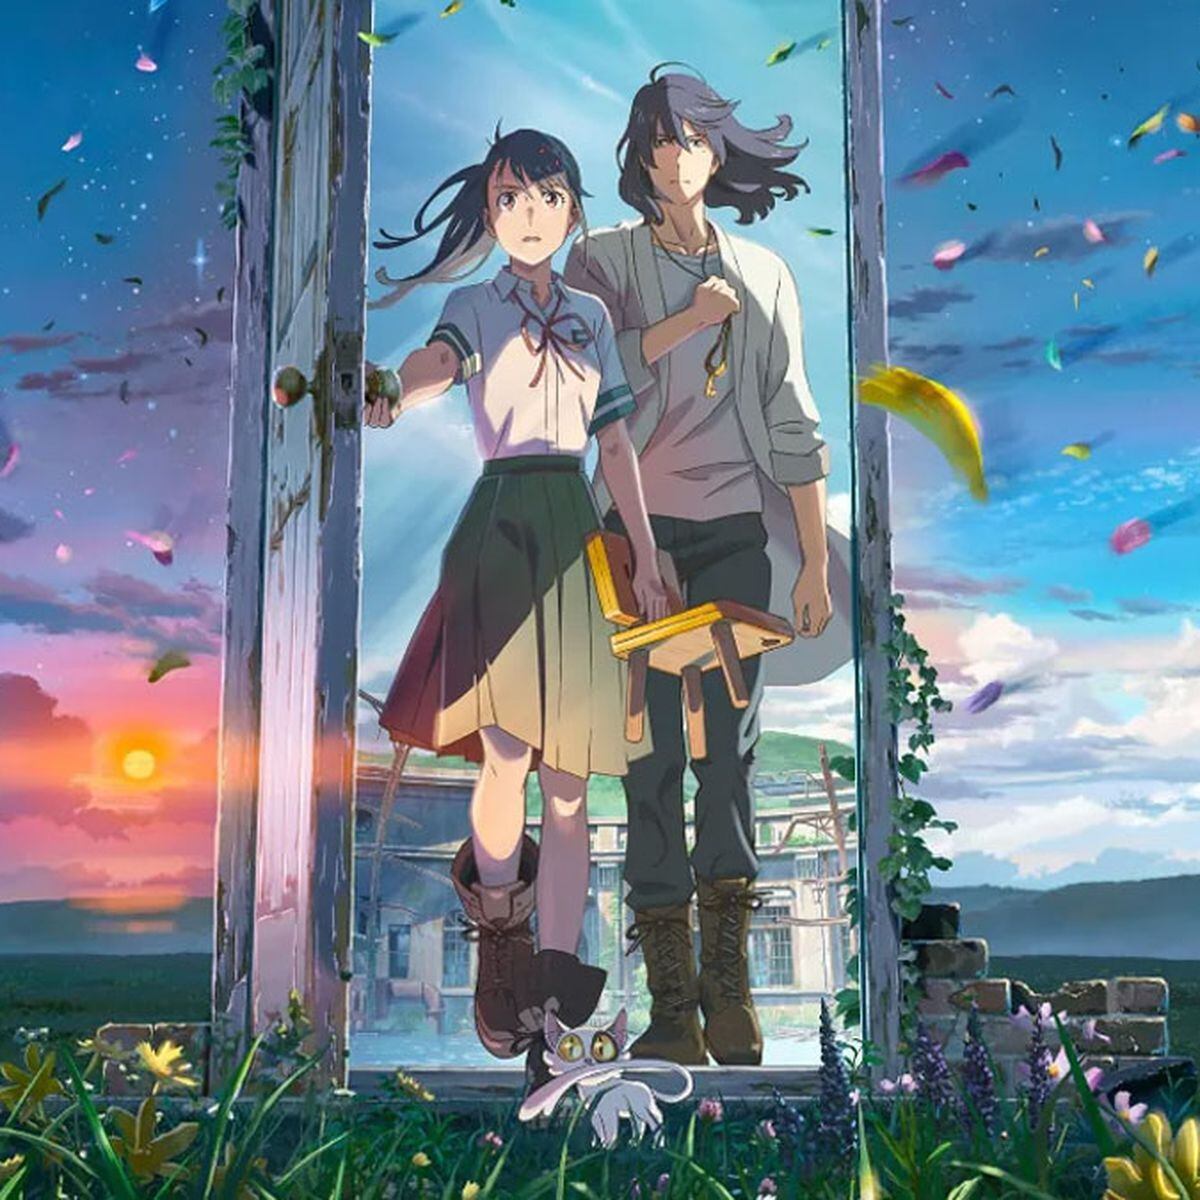 Suzume review: another visually stunning anime from Makoto Shinkai